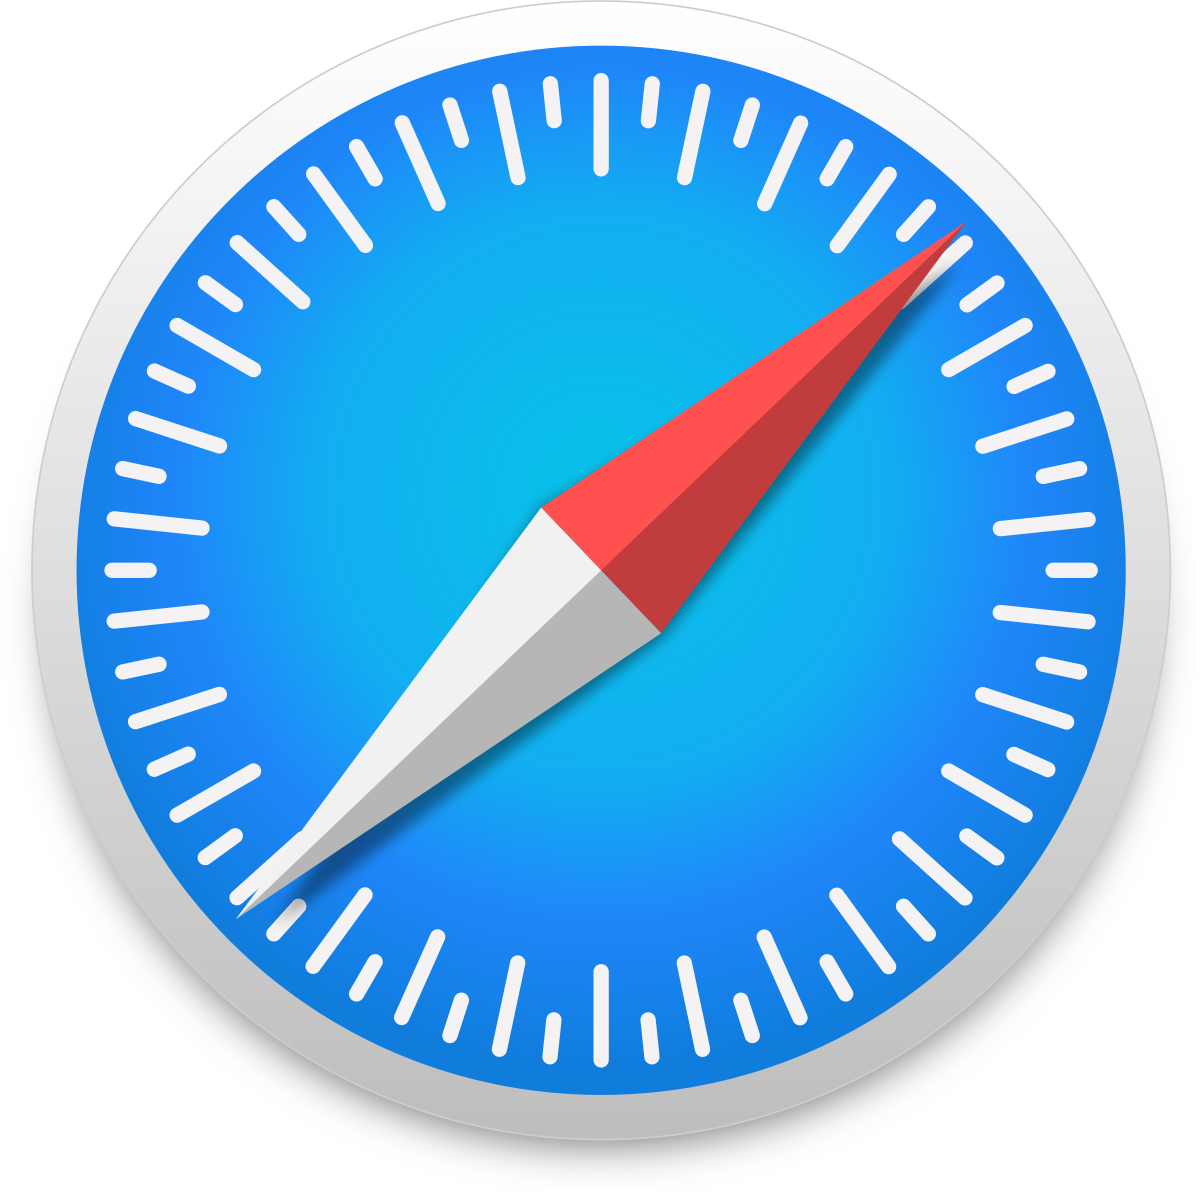 Safari web browser logo